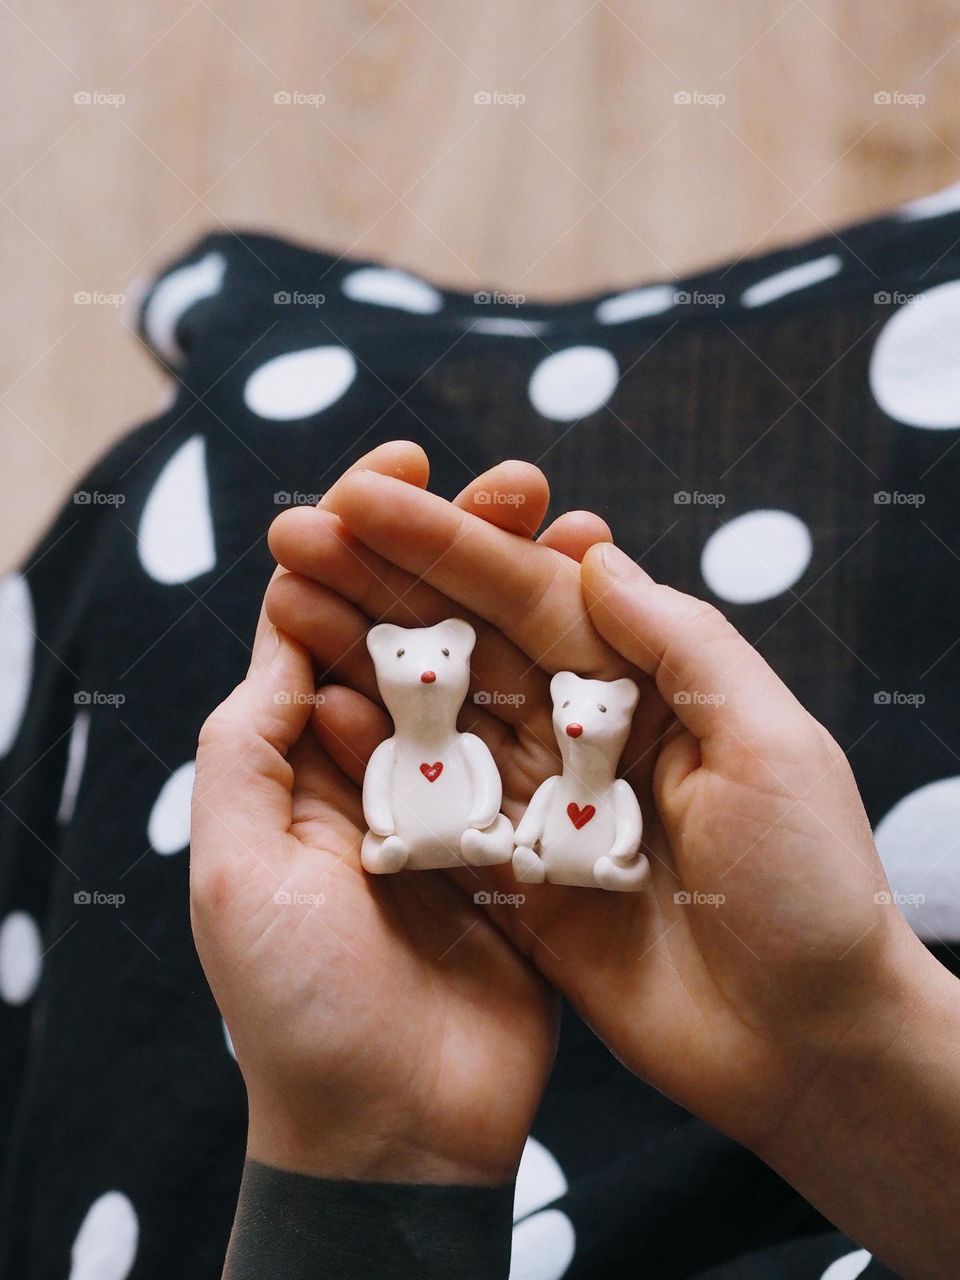 Cute little white ceramic bears on a hands